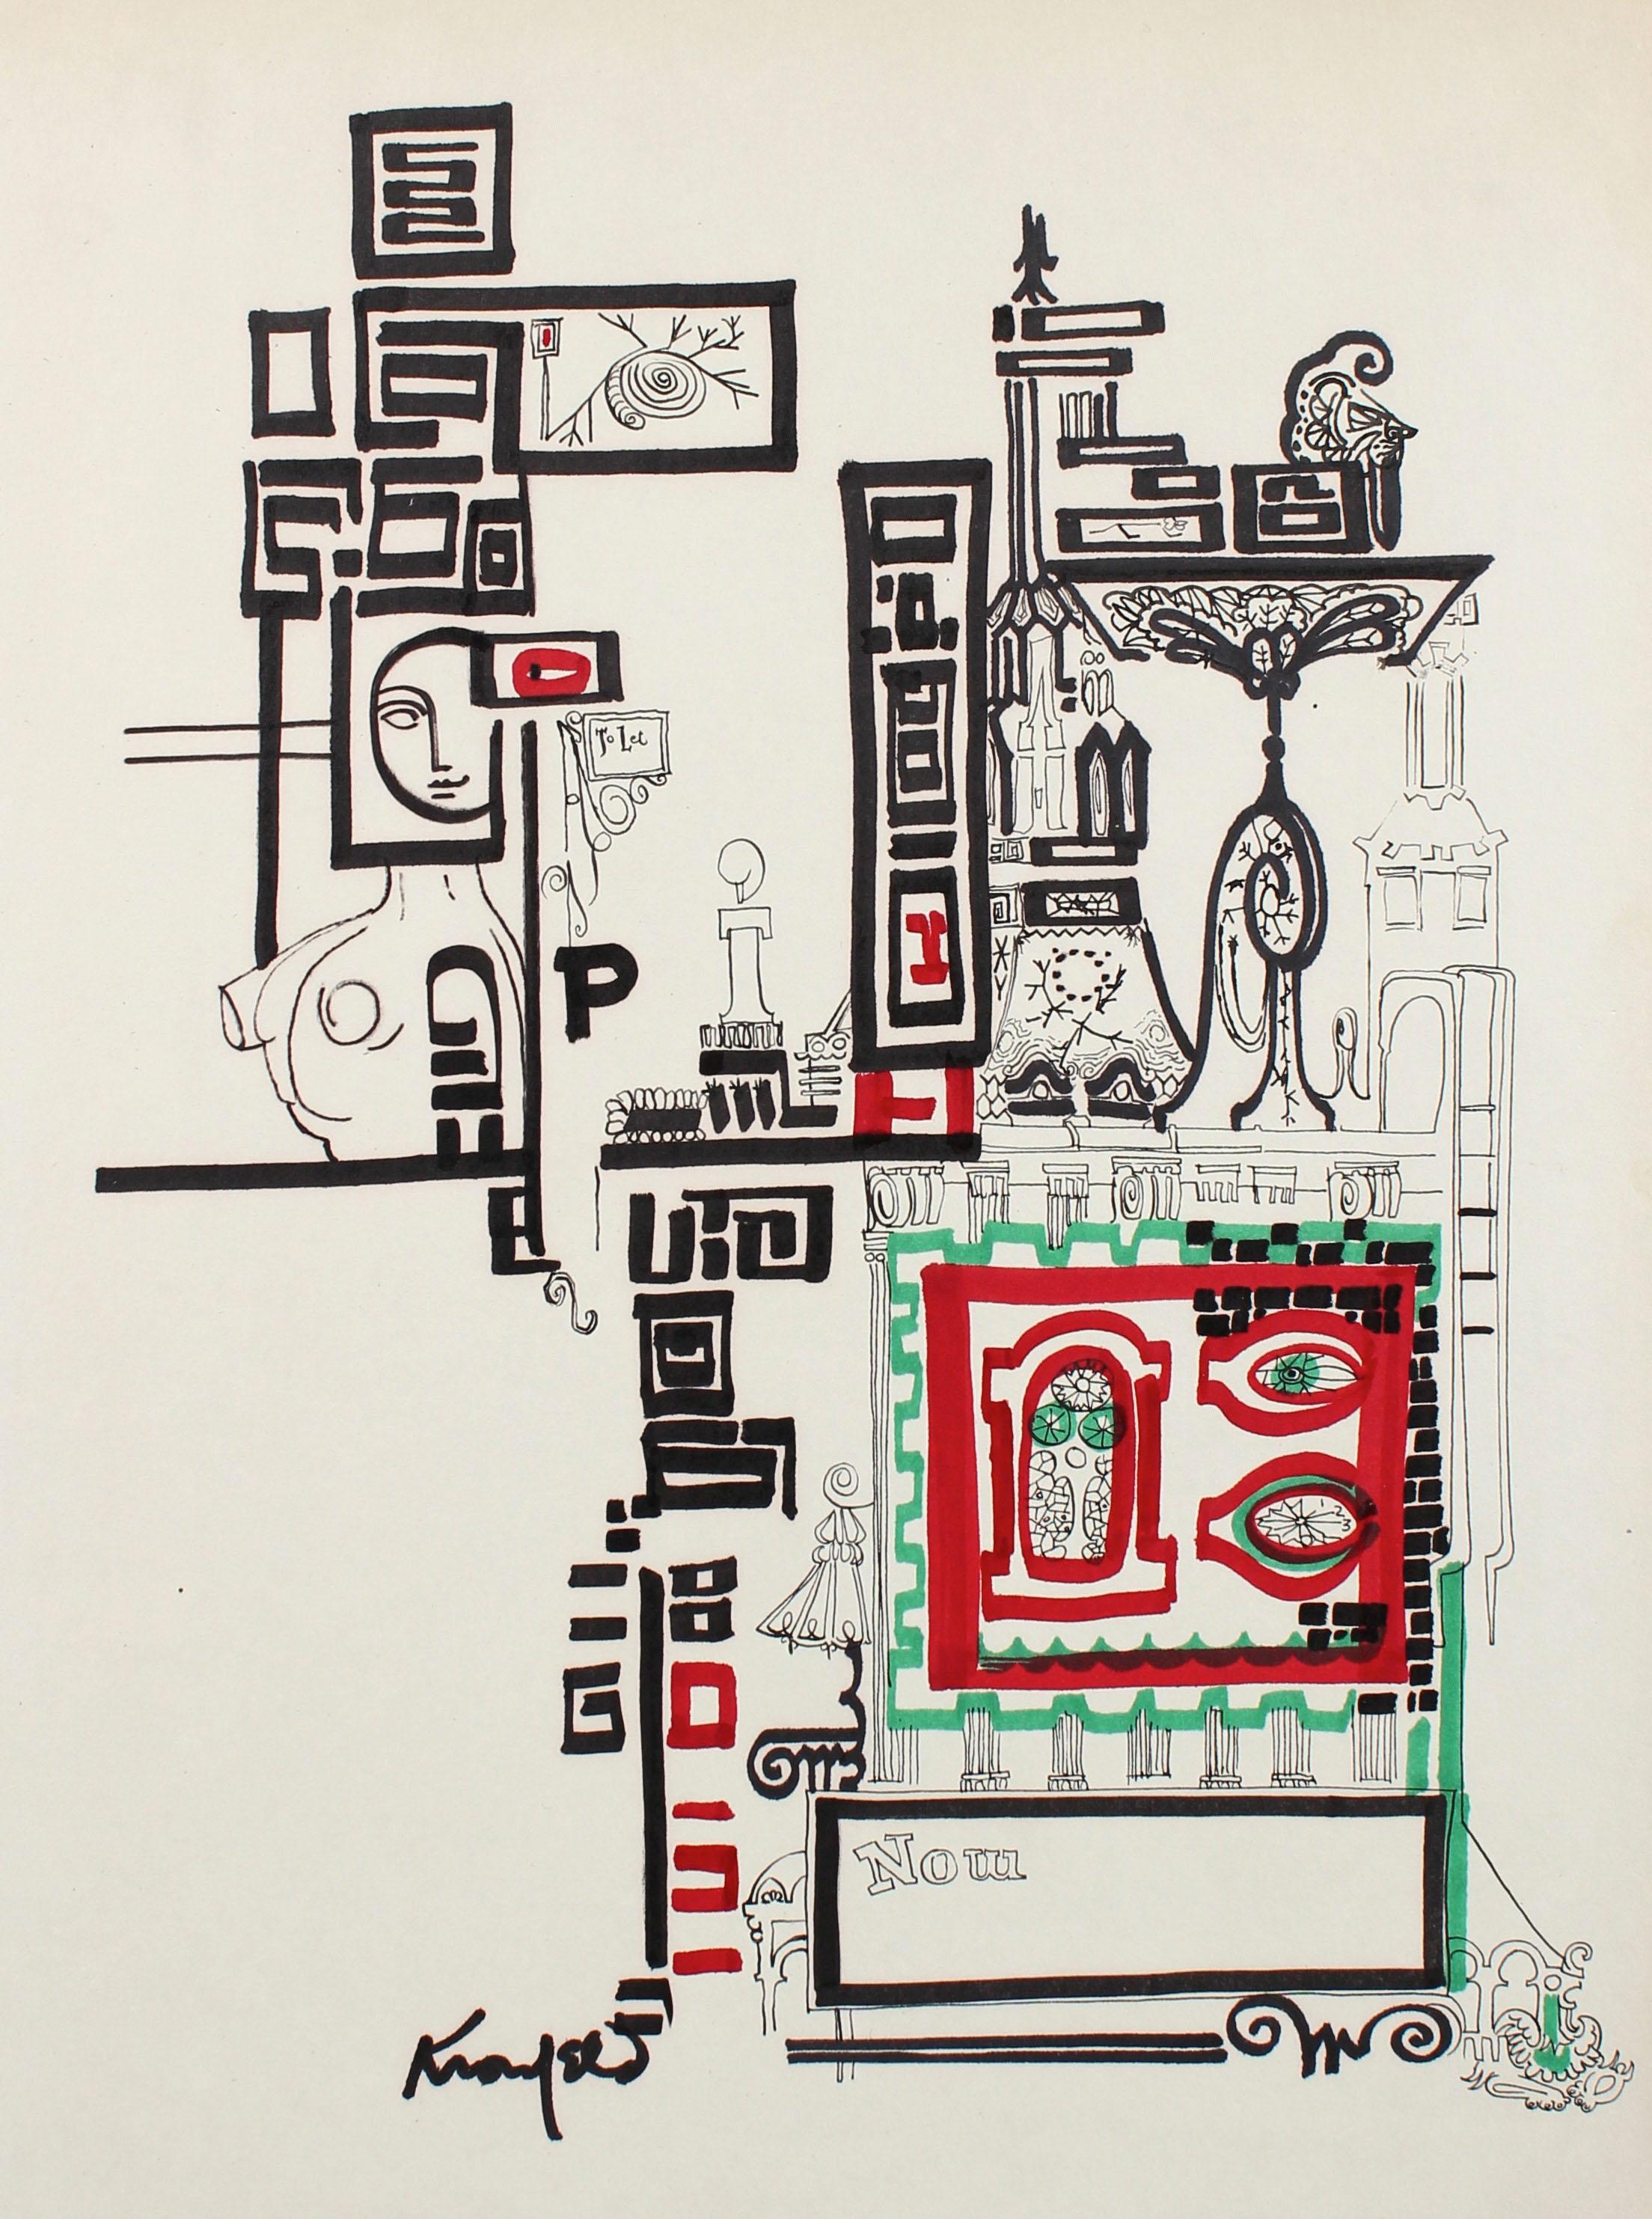 Morris Kronfeld Landscape Art - 1960s Illustrative Building in a Calligraphic Style, Ink on Paper Board 